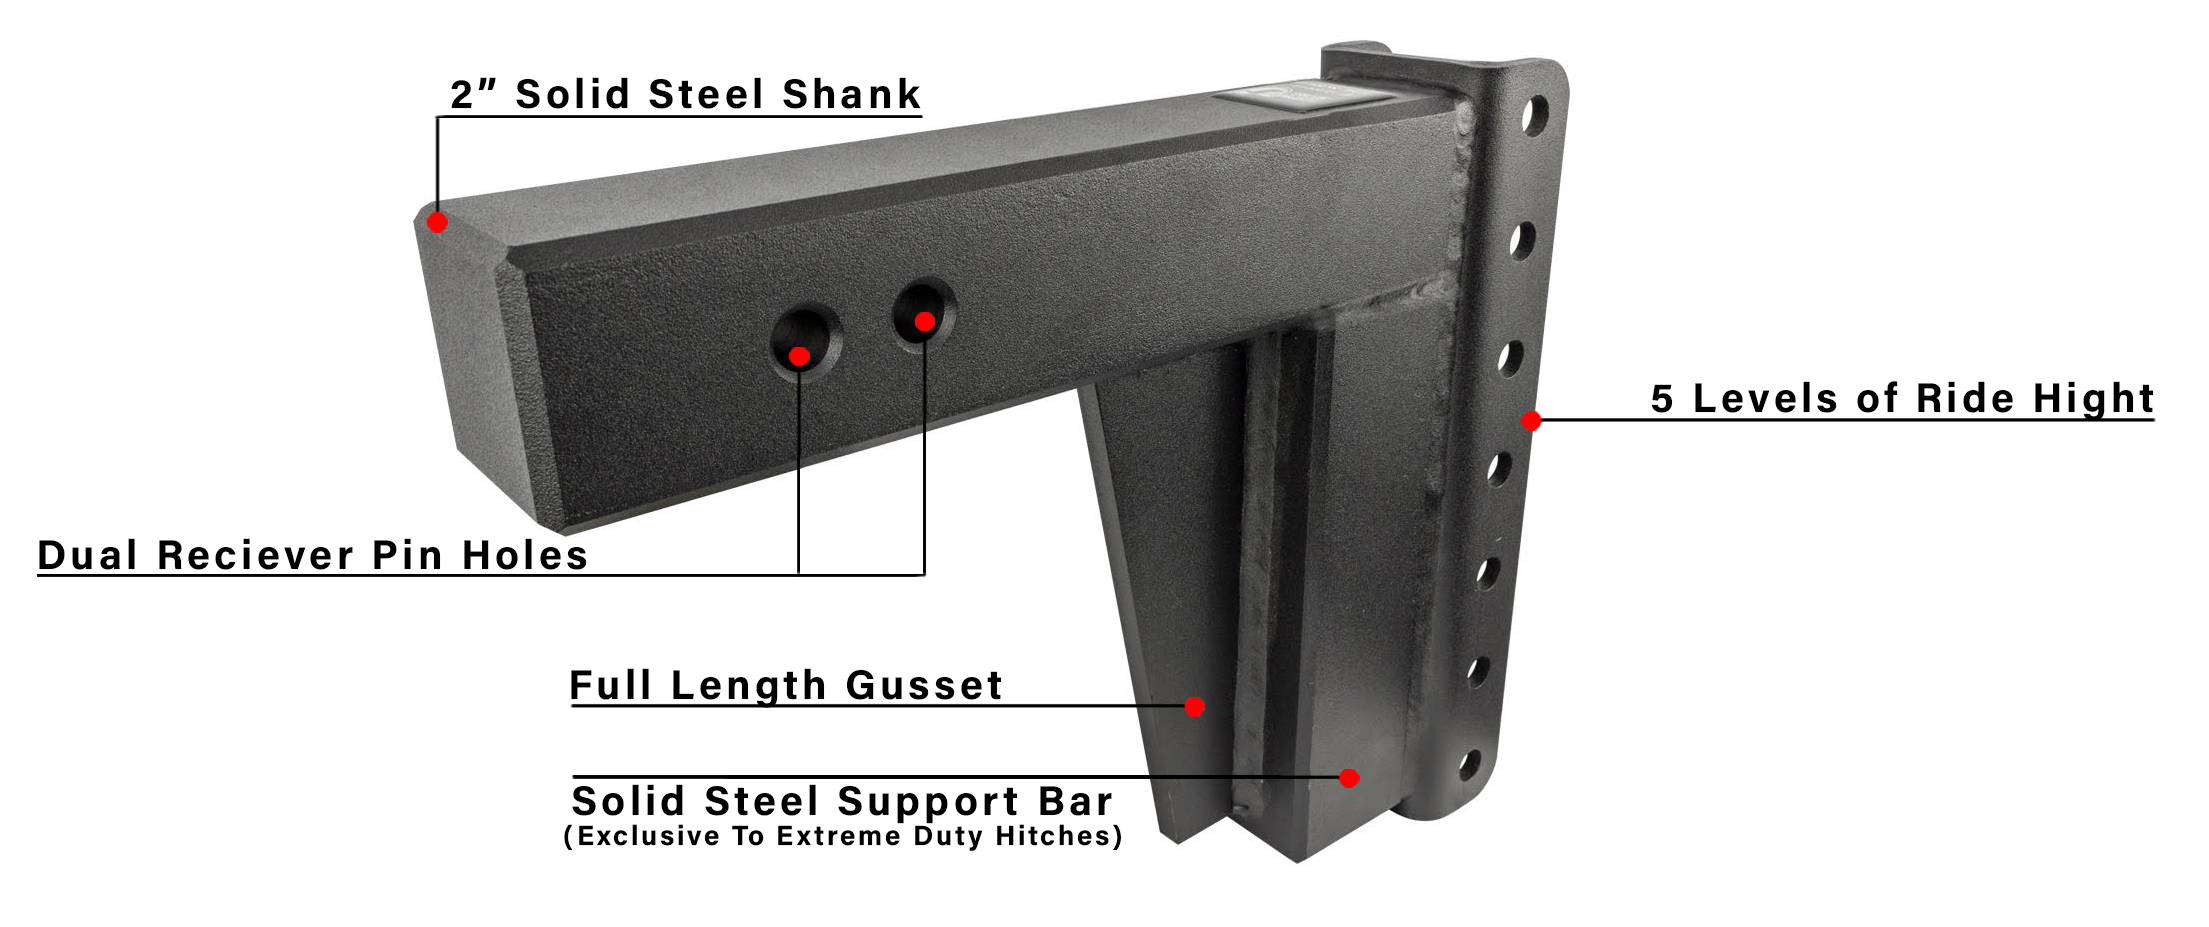 Features of BulletProof Solid Steel Shank